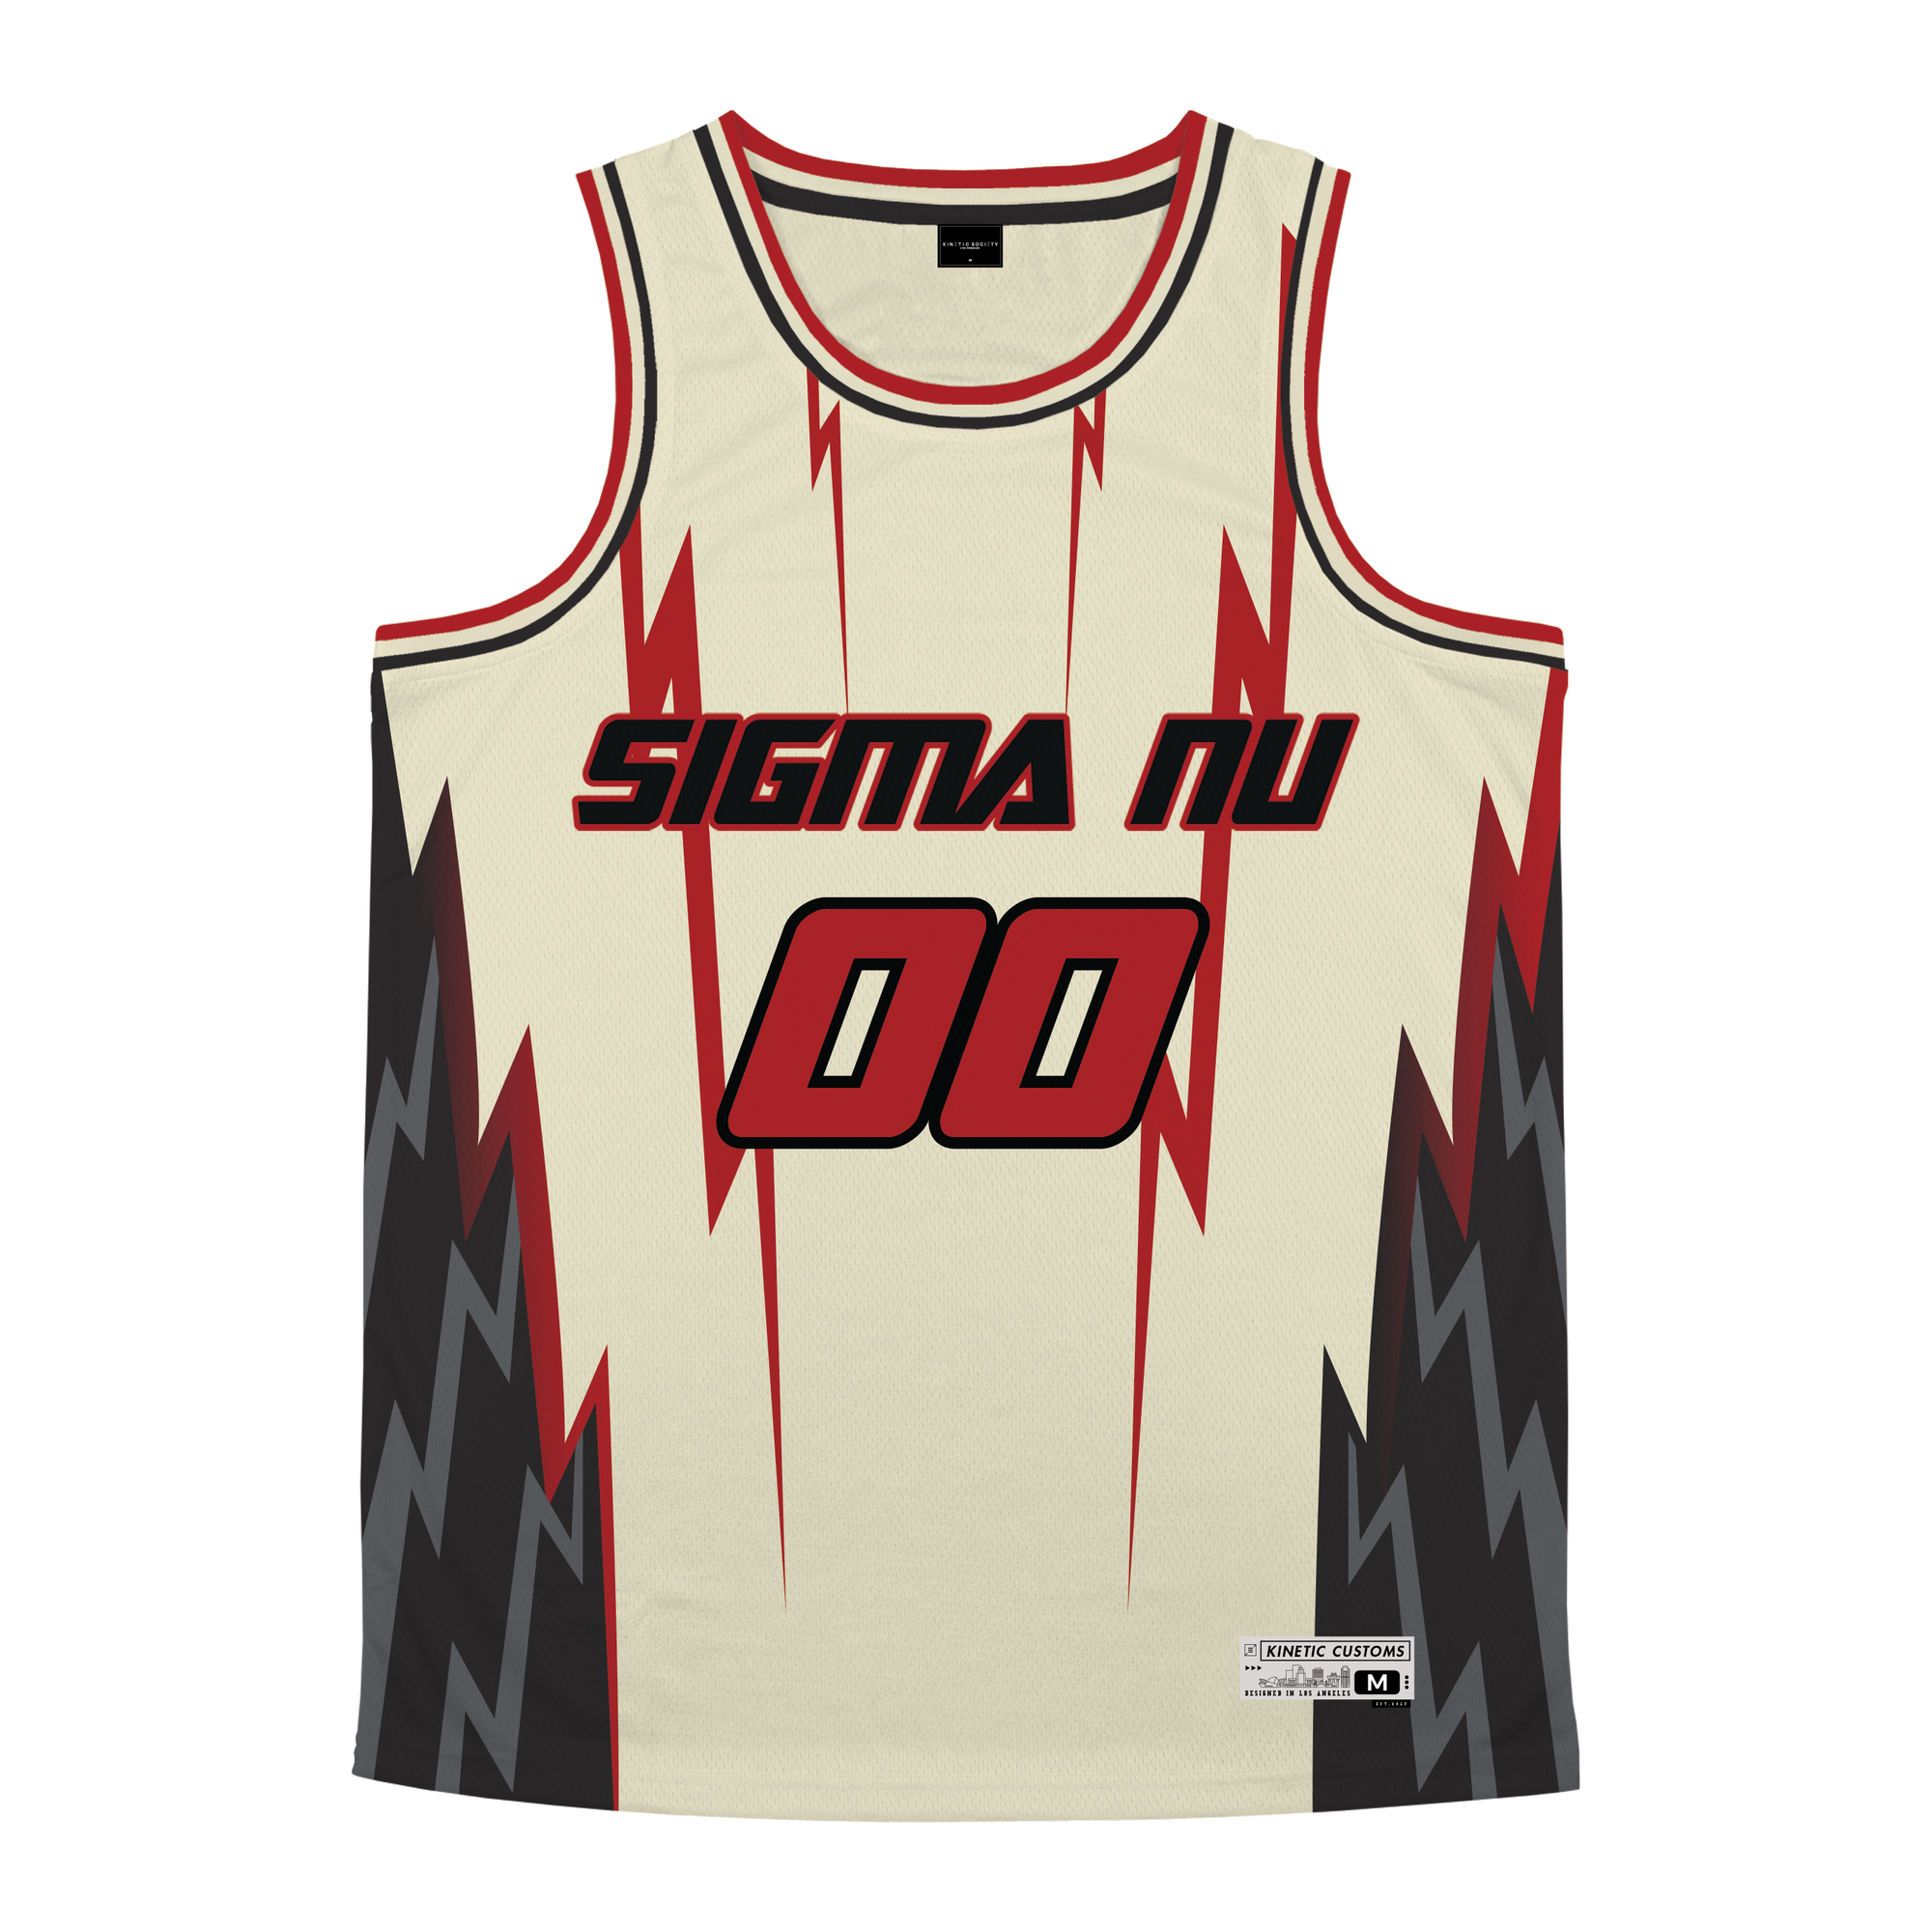 Sigma Nu - Rapture Basketball Jersey